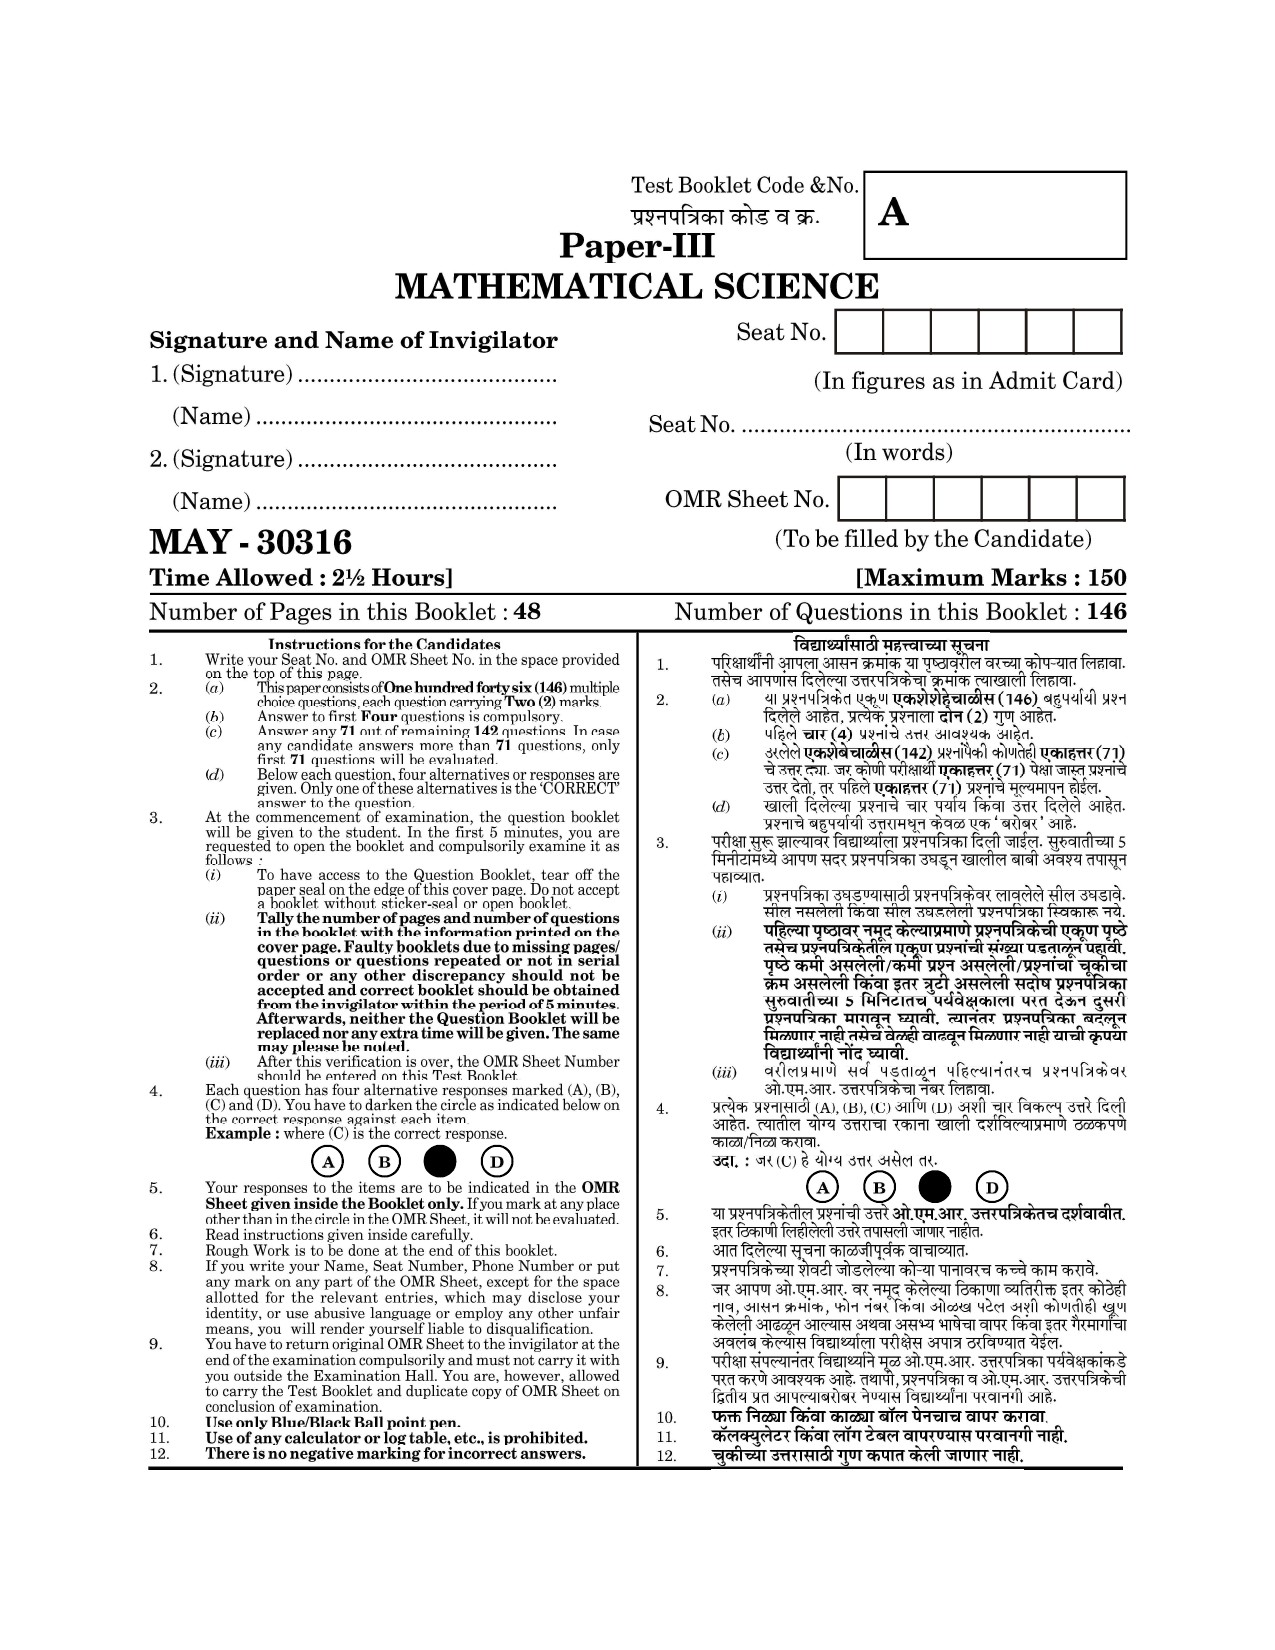 Maharashtra SET Mathematical Sciences Question Paper III May 2016 1